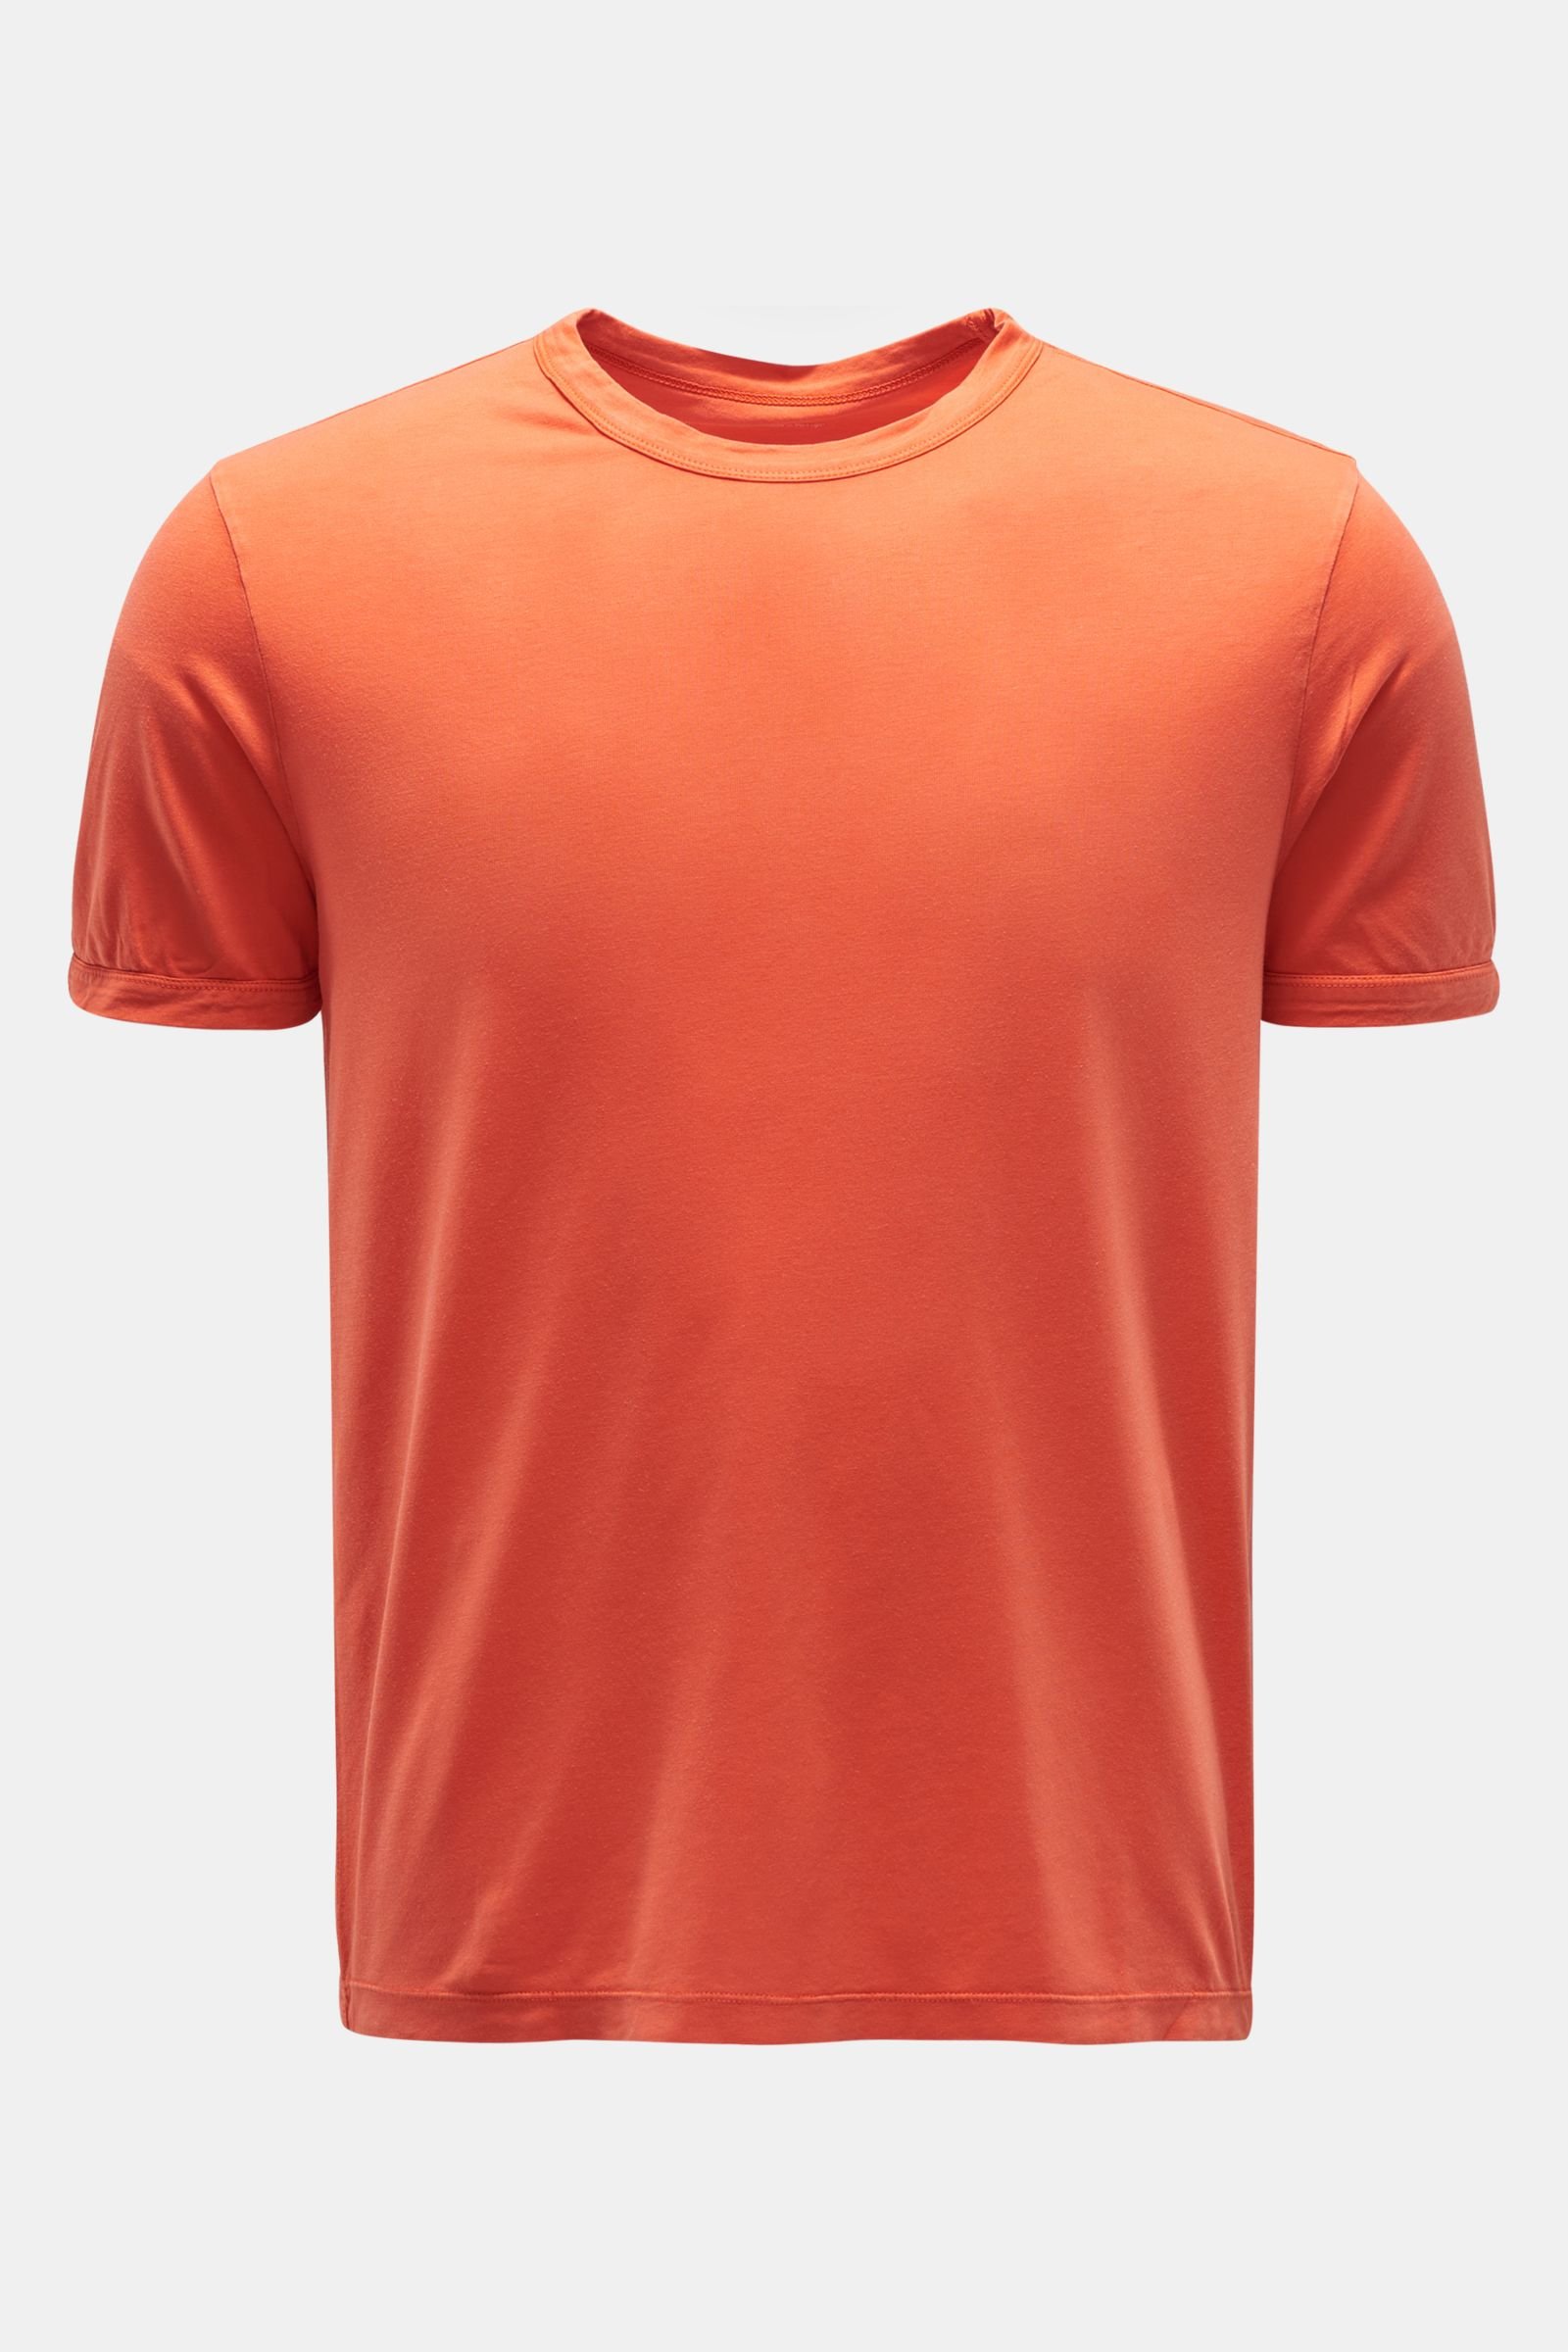 Crew neck T-shirt orange